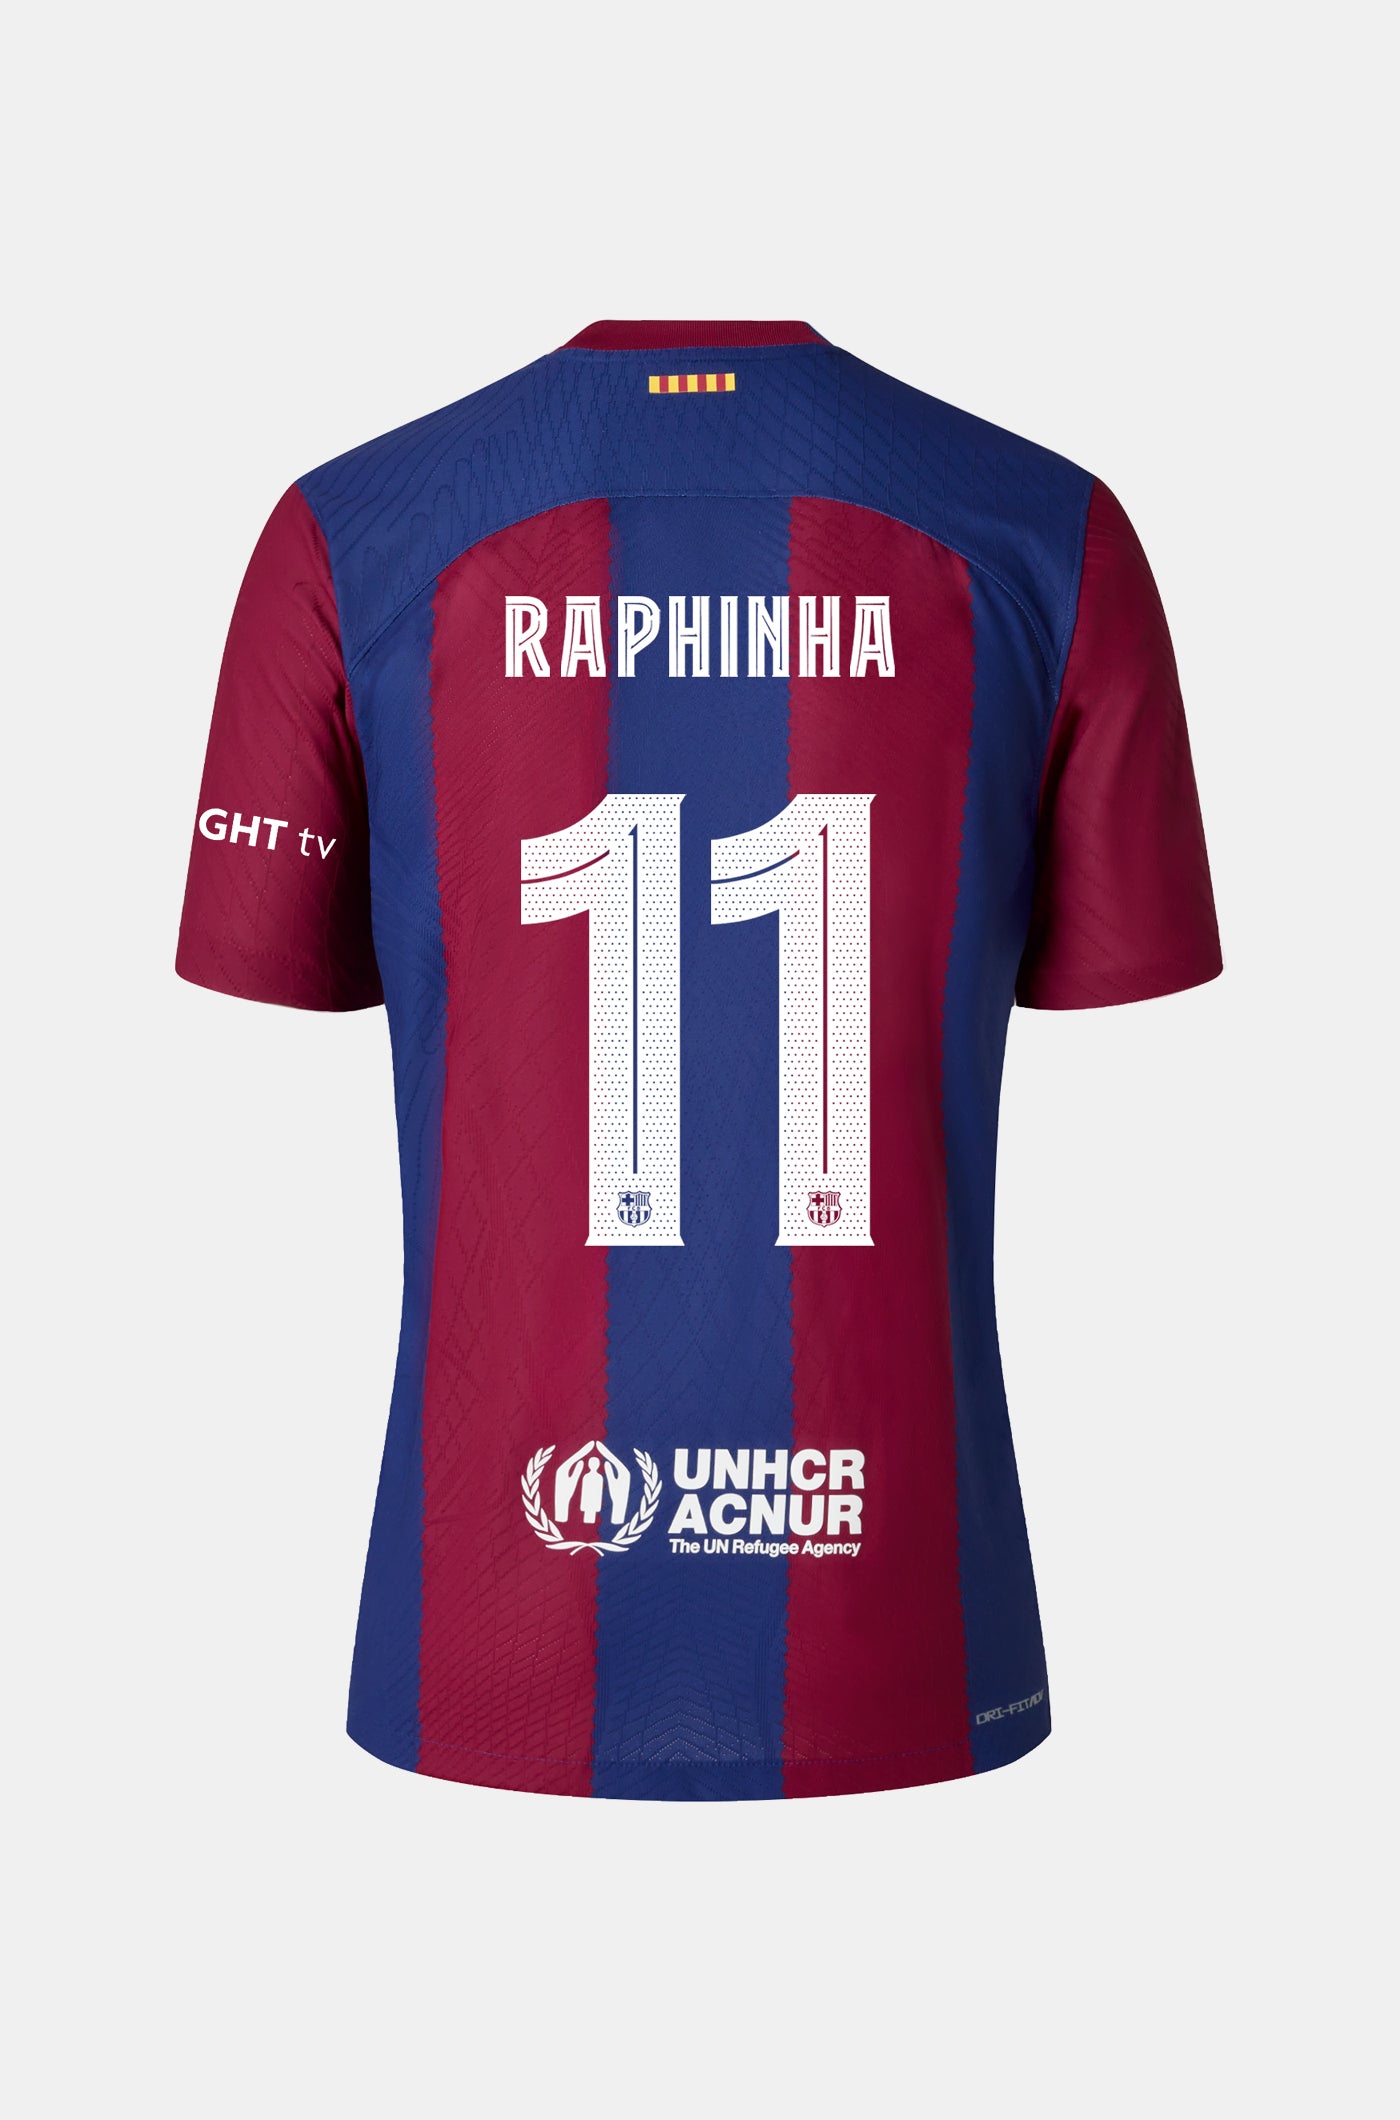 FC Barcelona home shirt 23/24 - Long-sleeve Player's Edition - RAPHINHA